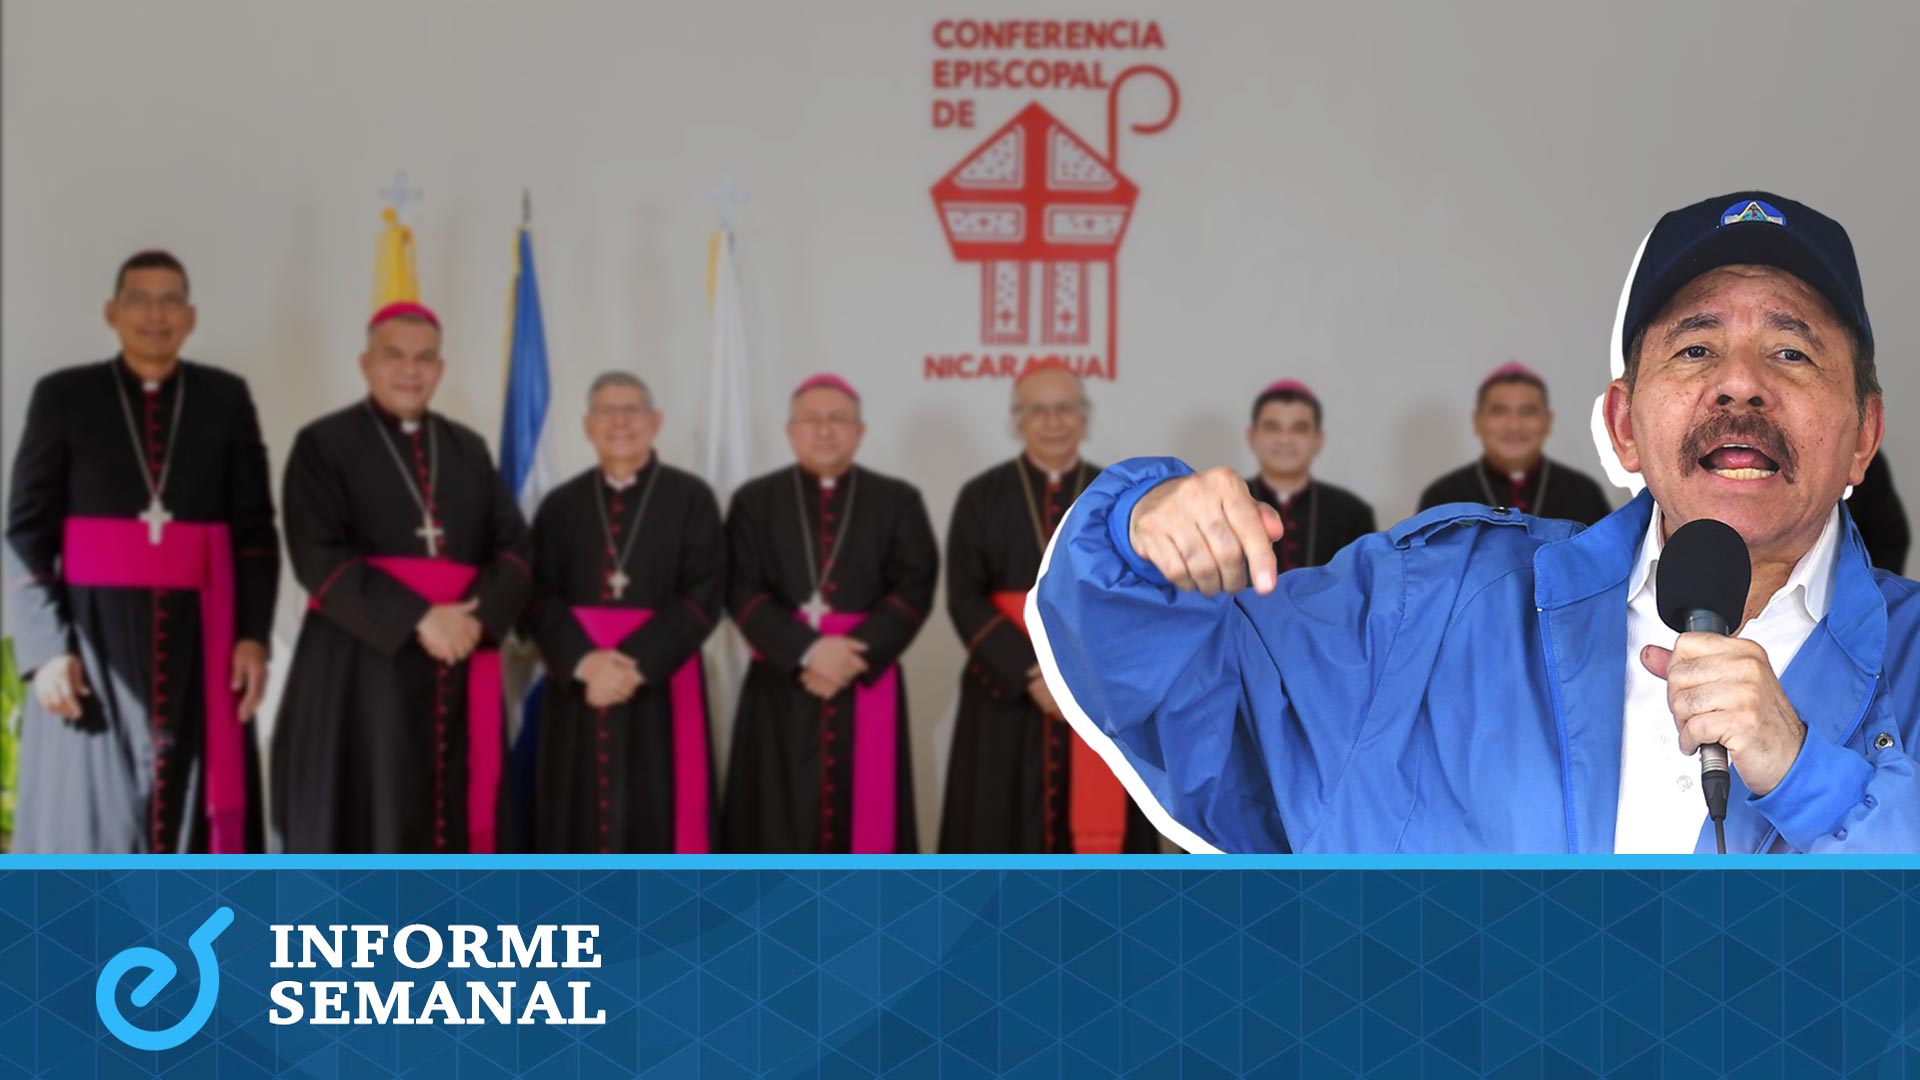 Conferencia episcopal de Nicaragua